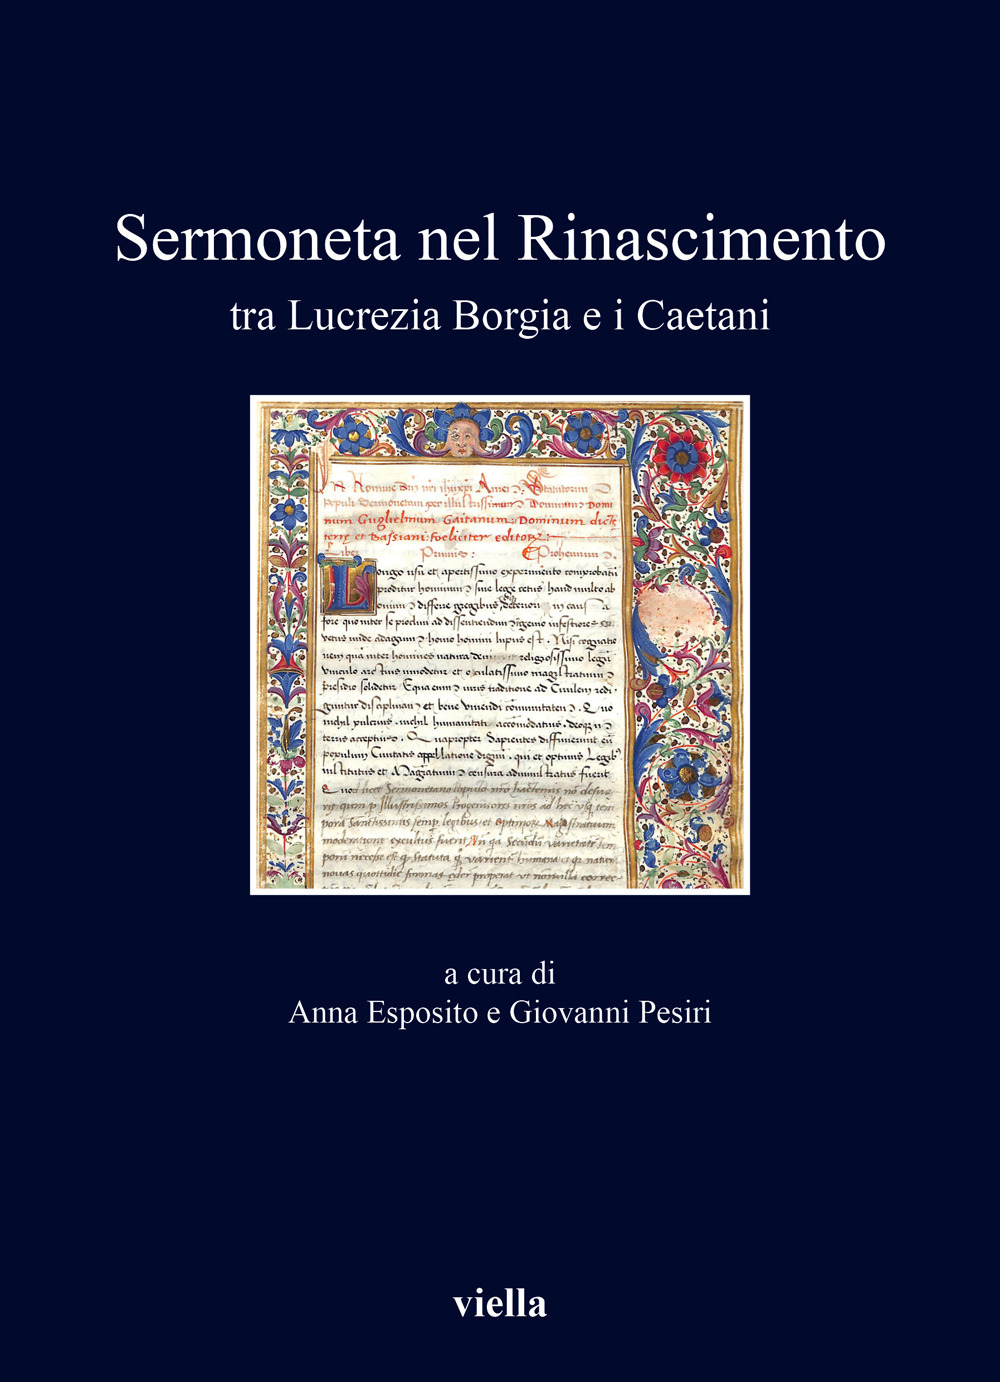 Sermoneta nel Rinascimento tra Lucrezia Borgia e i Caetani